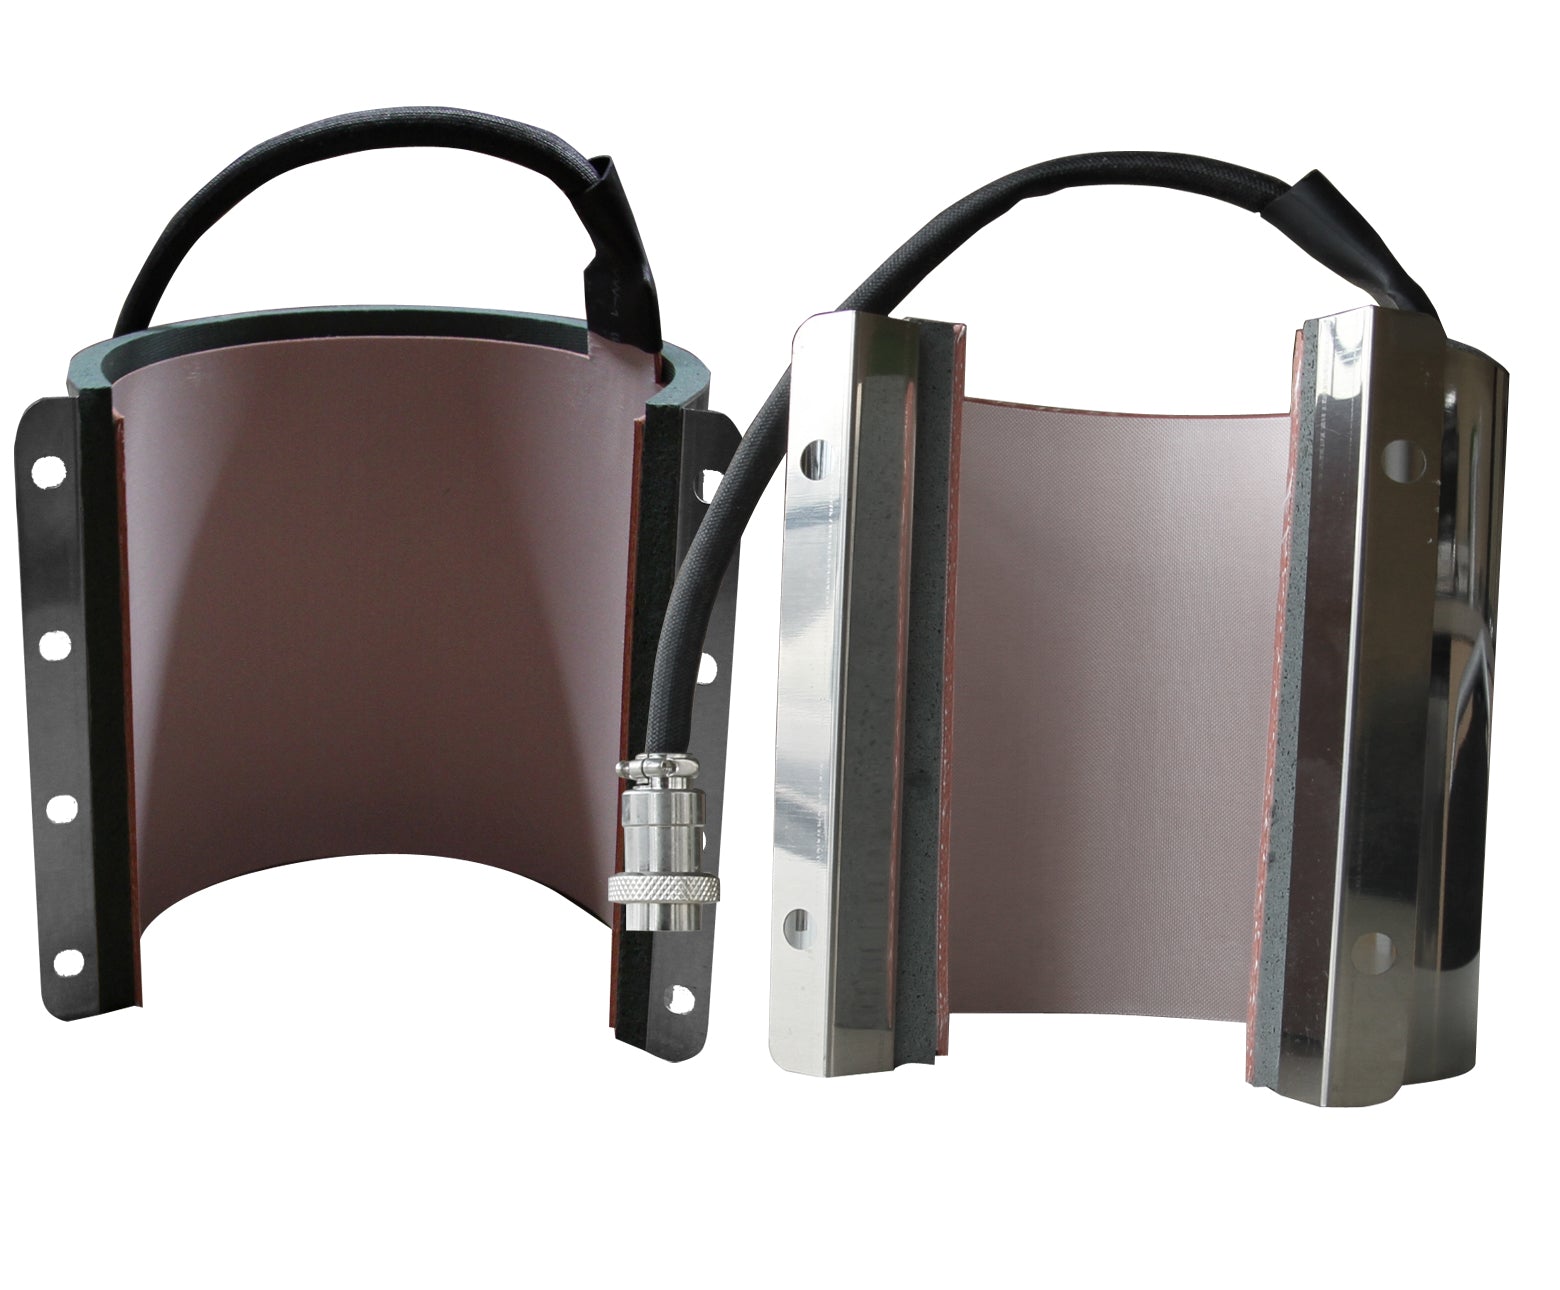 Replacement Mug Element for Joto Mug Press 5 Stations - Joto Imaging Supplies Canada